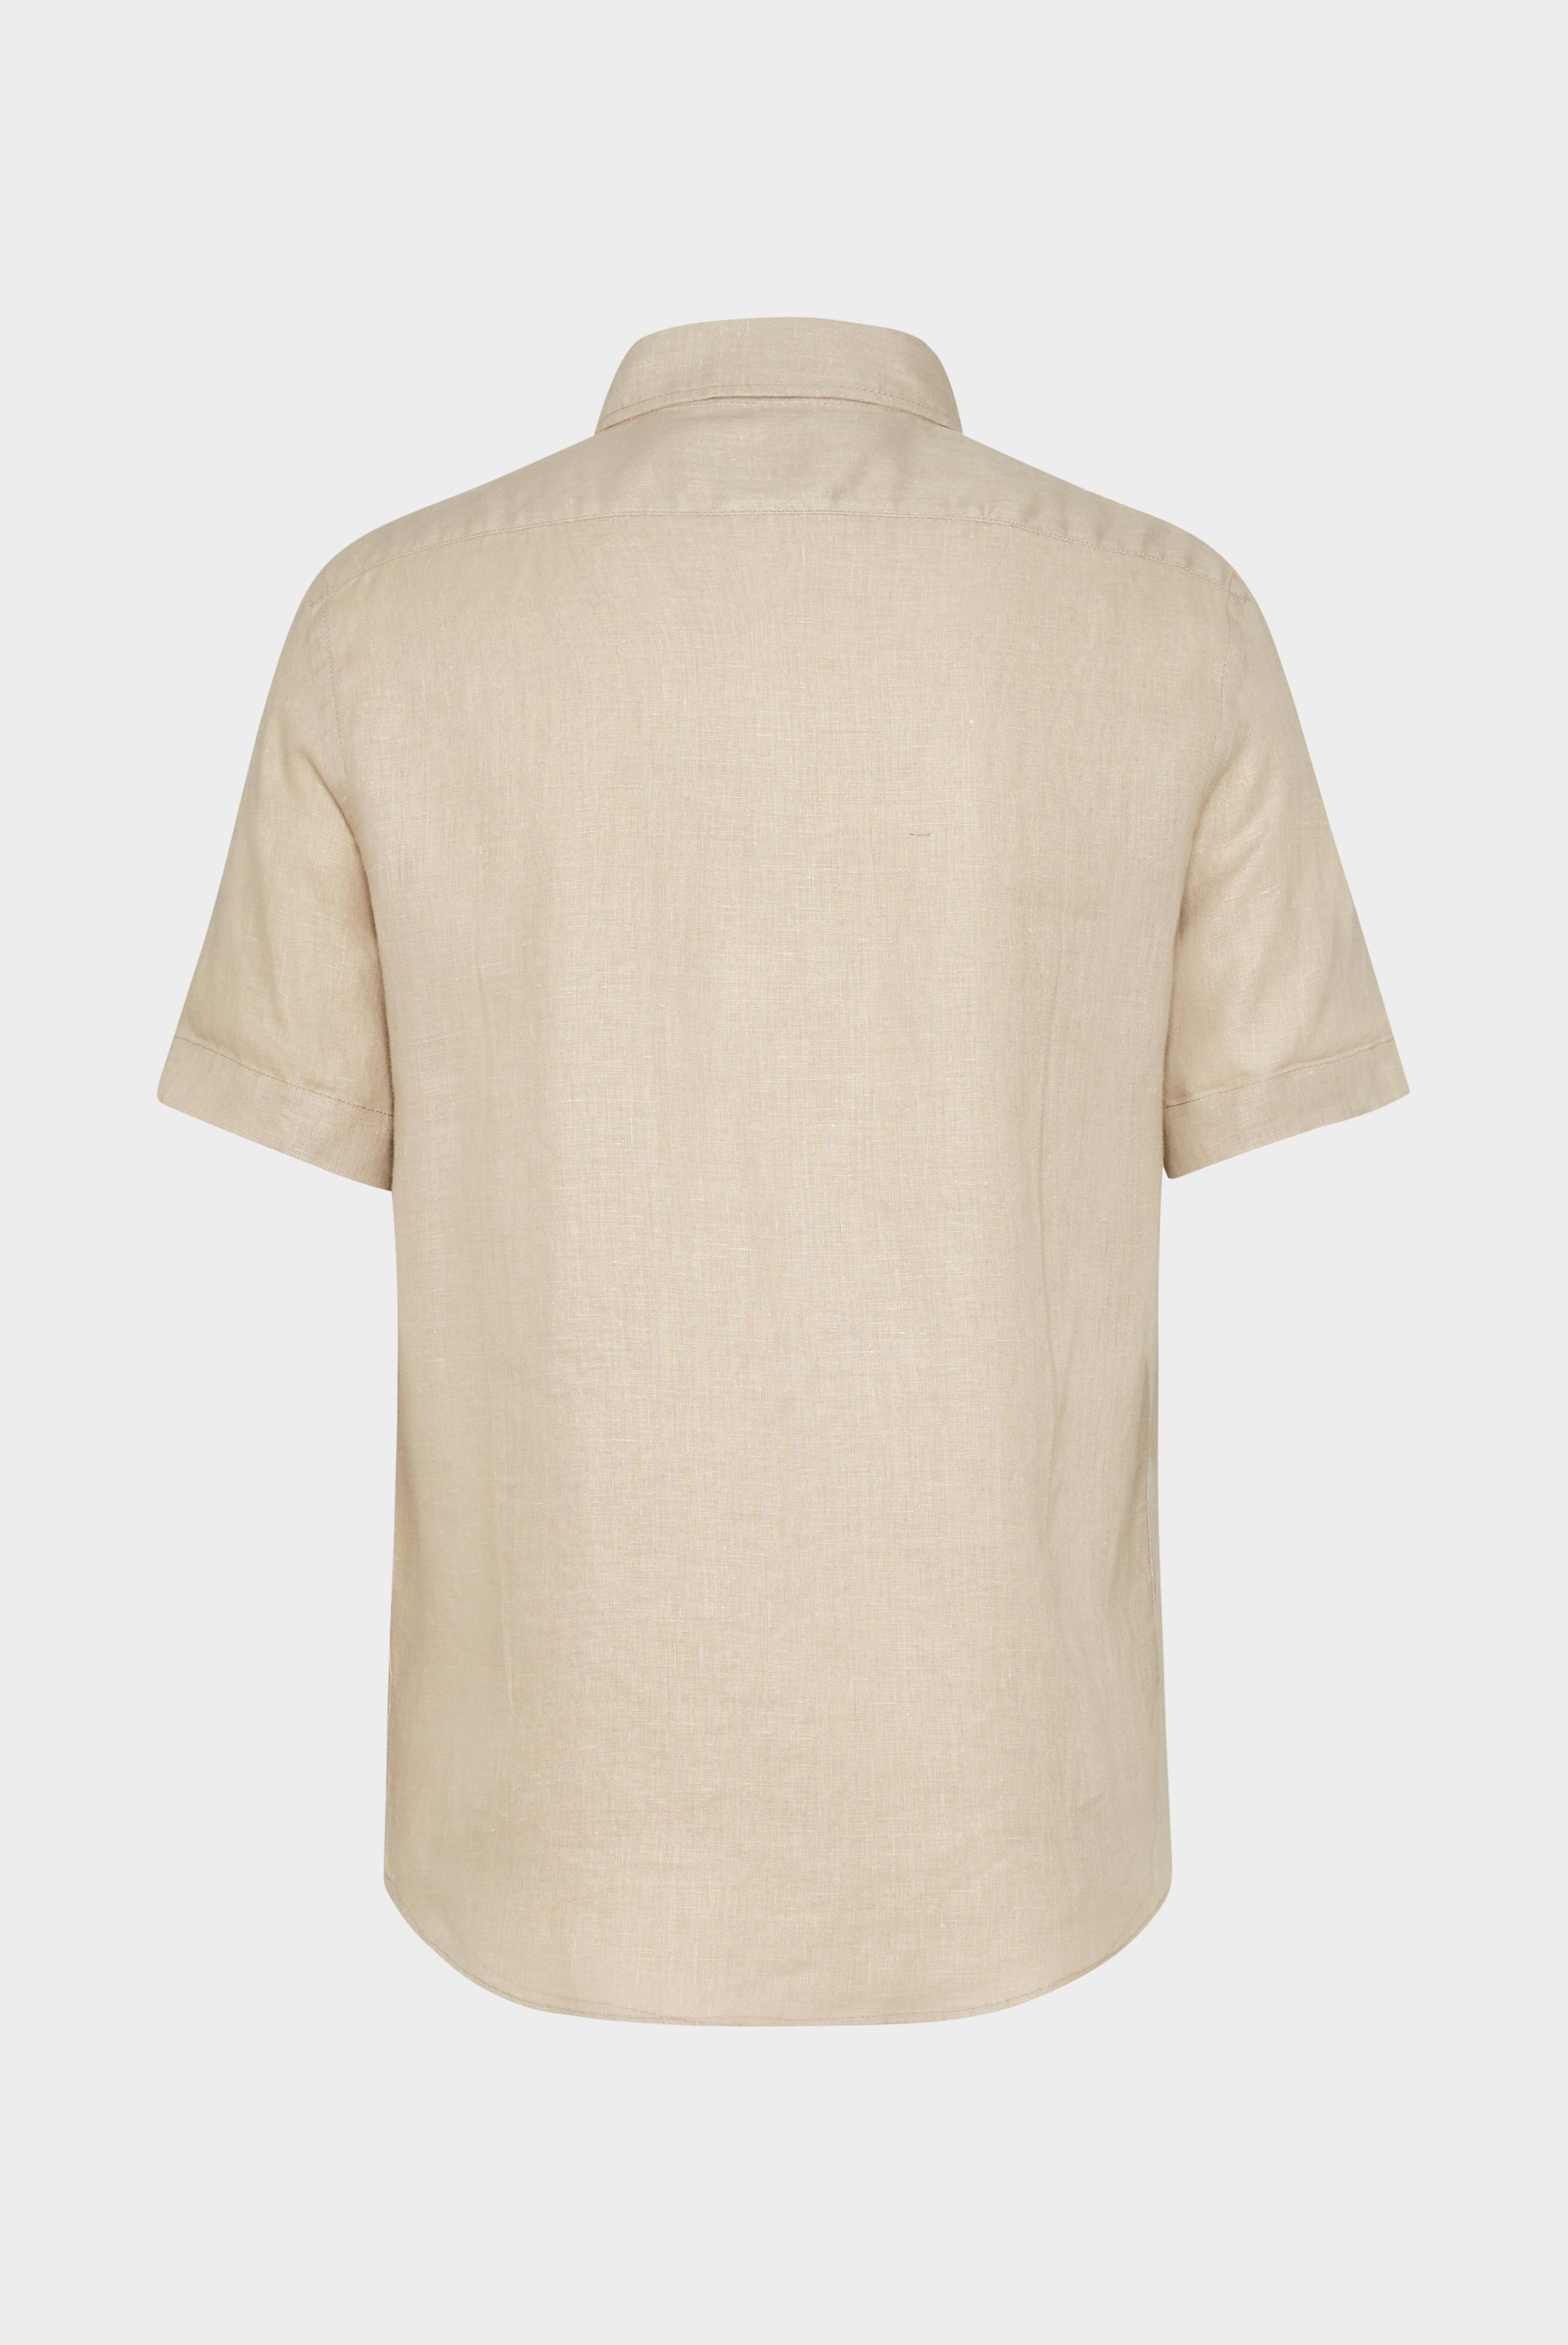 Kurzarm Hemden+Kurzarm-Hemd aus Leinen in kastiger Passform+20.2035.P8.150555.130.42